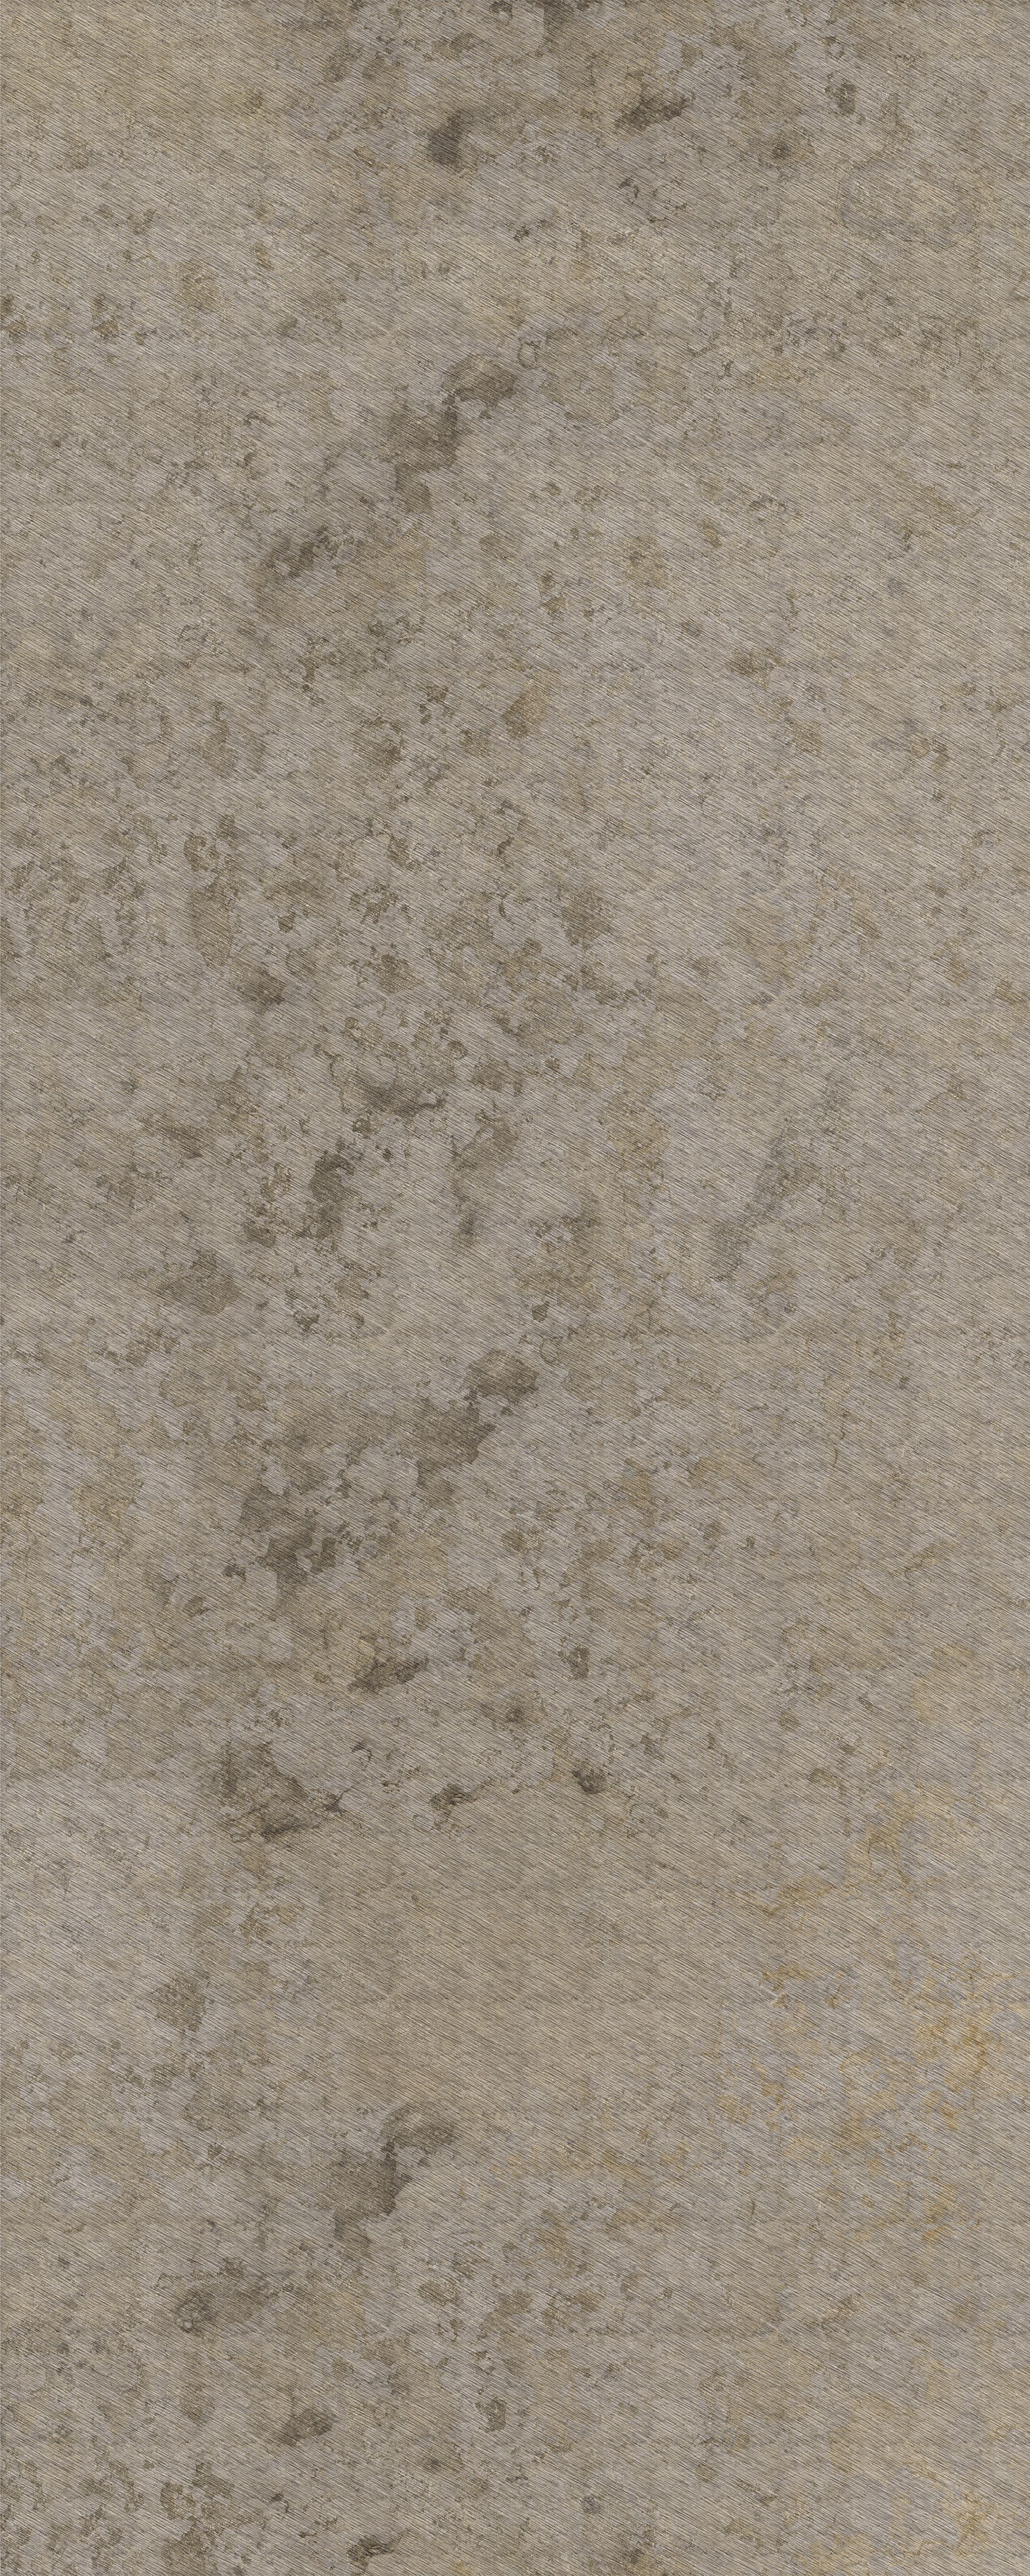 Интерьерная панель Concrete Streak 3000*1200*4 SS-7.3.1 Sienna глянцевый